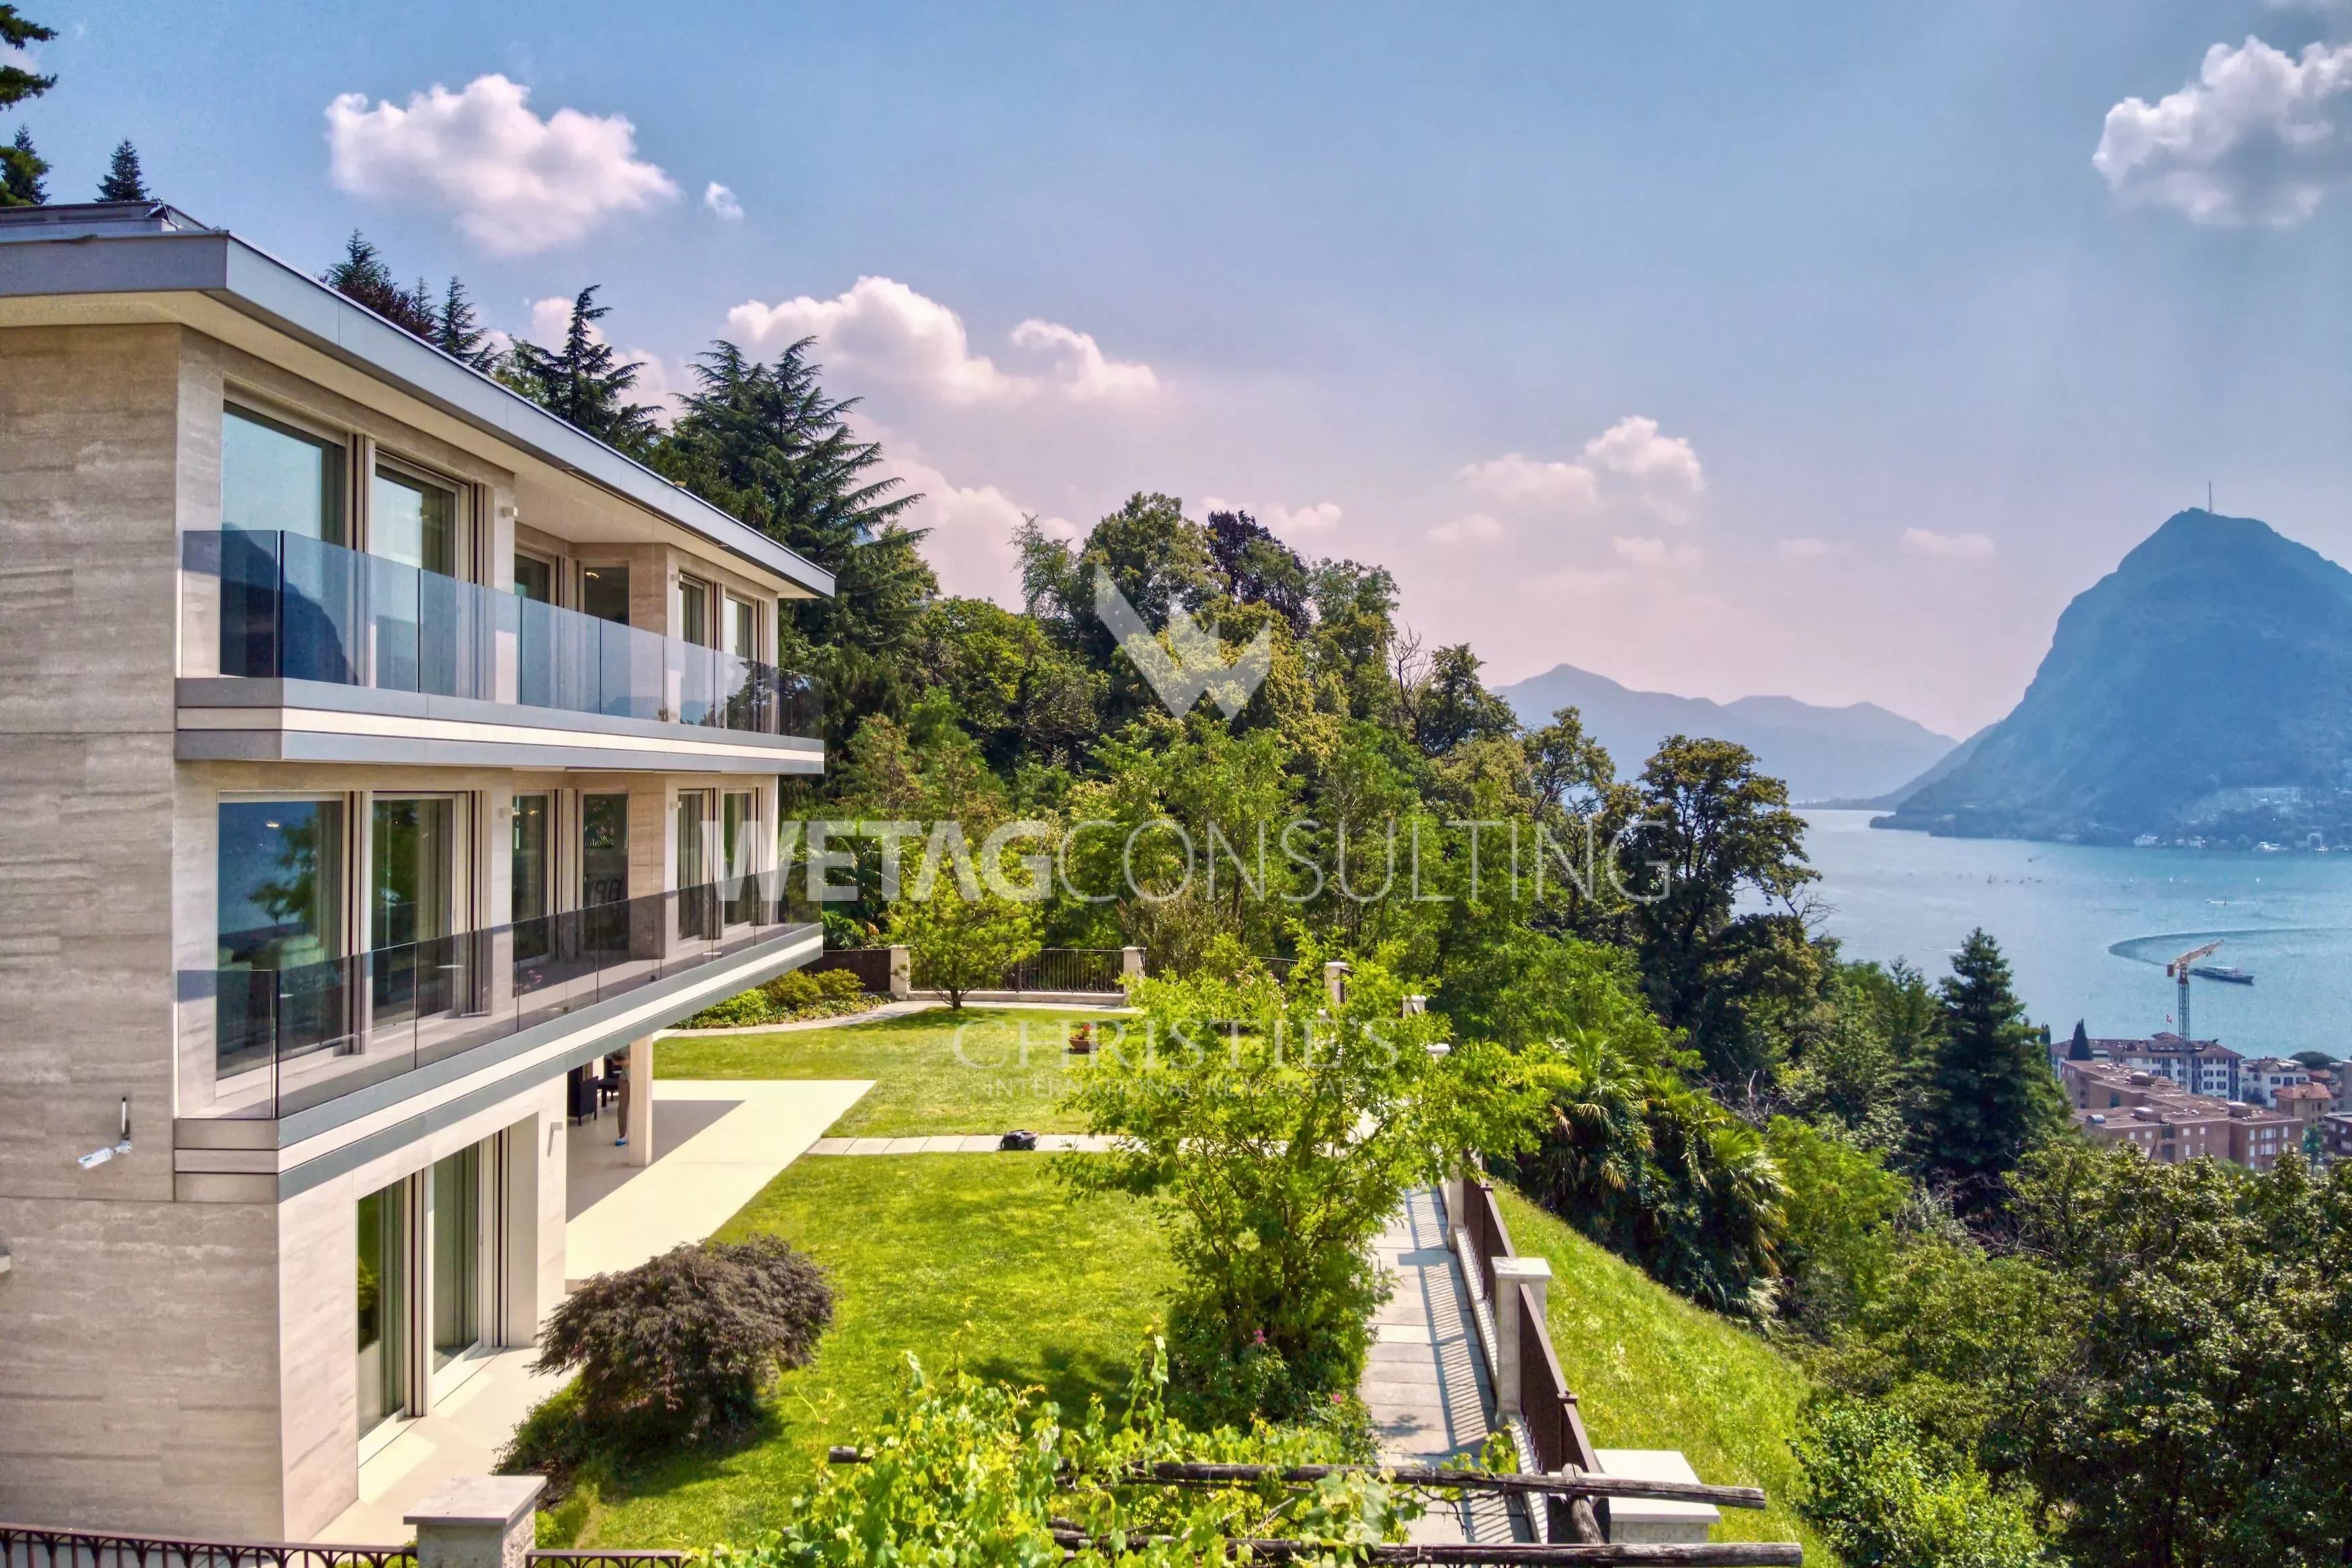 Switzerland Luxury Real Estate for Sale Christies International Real Estate